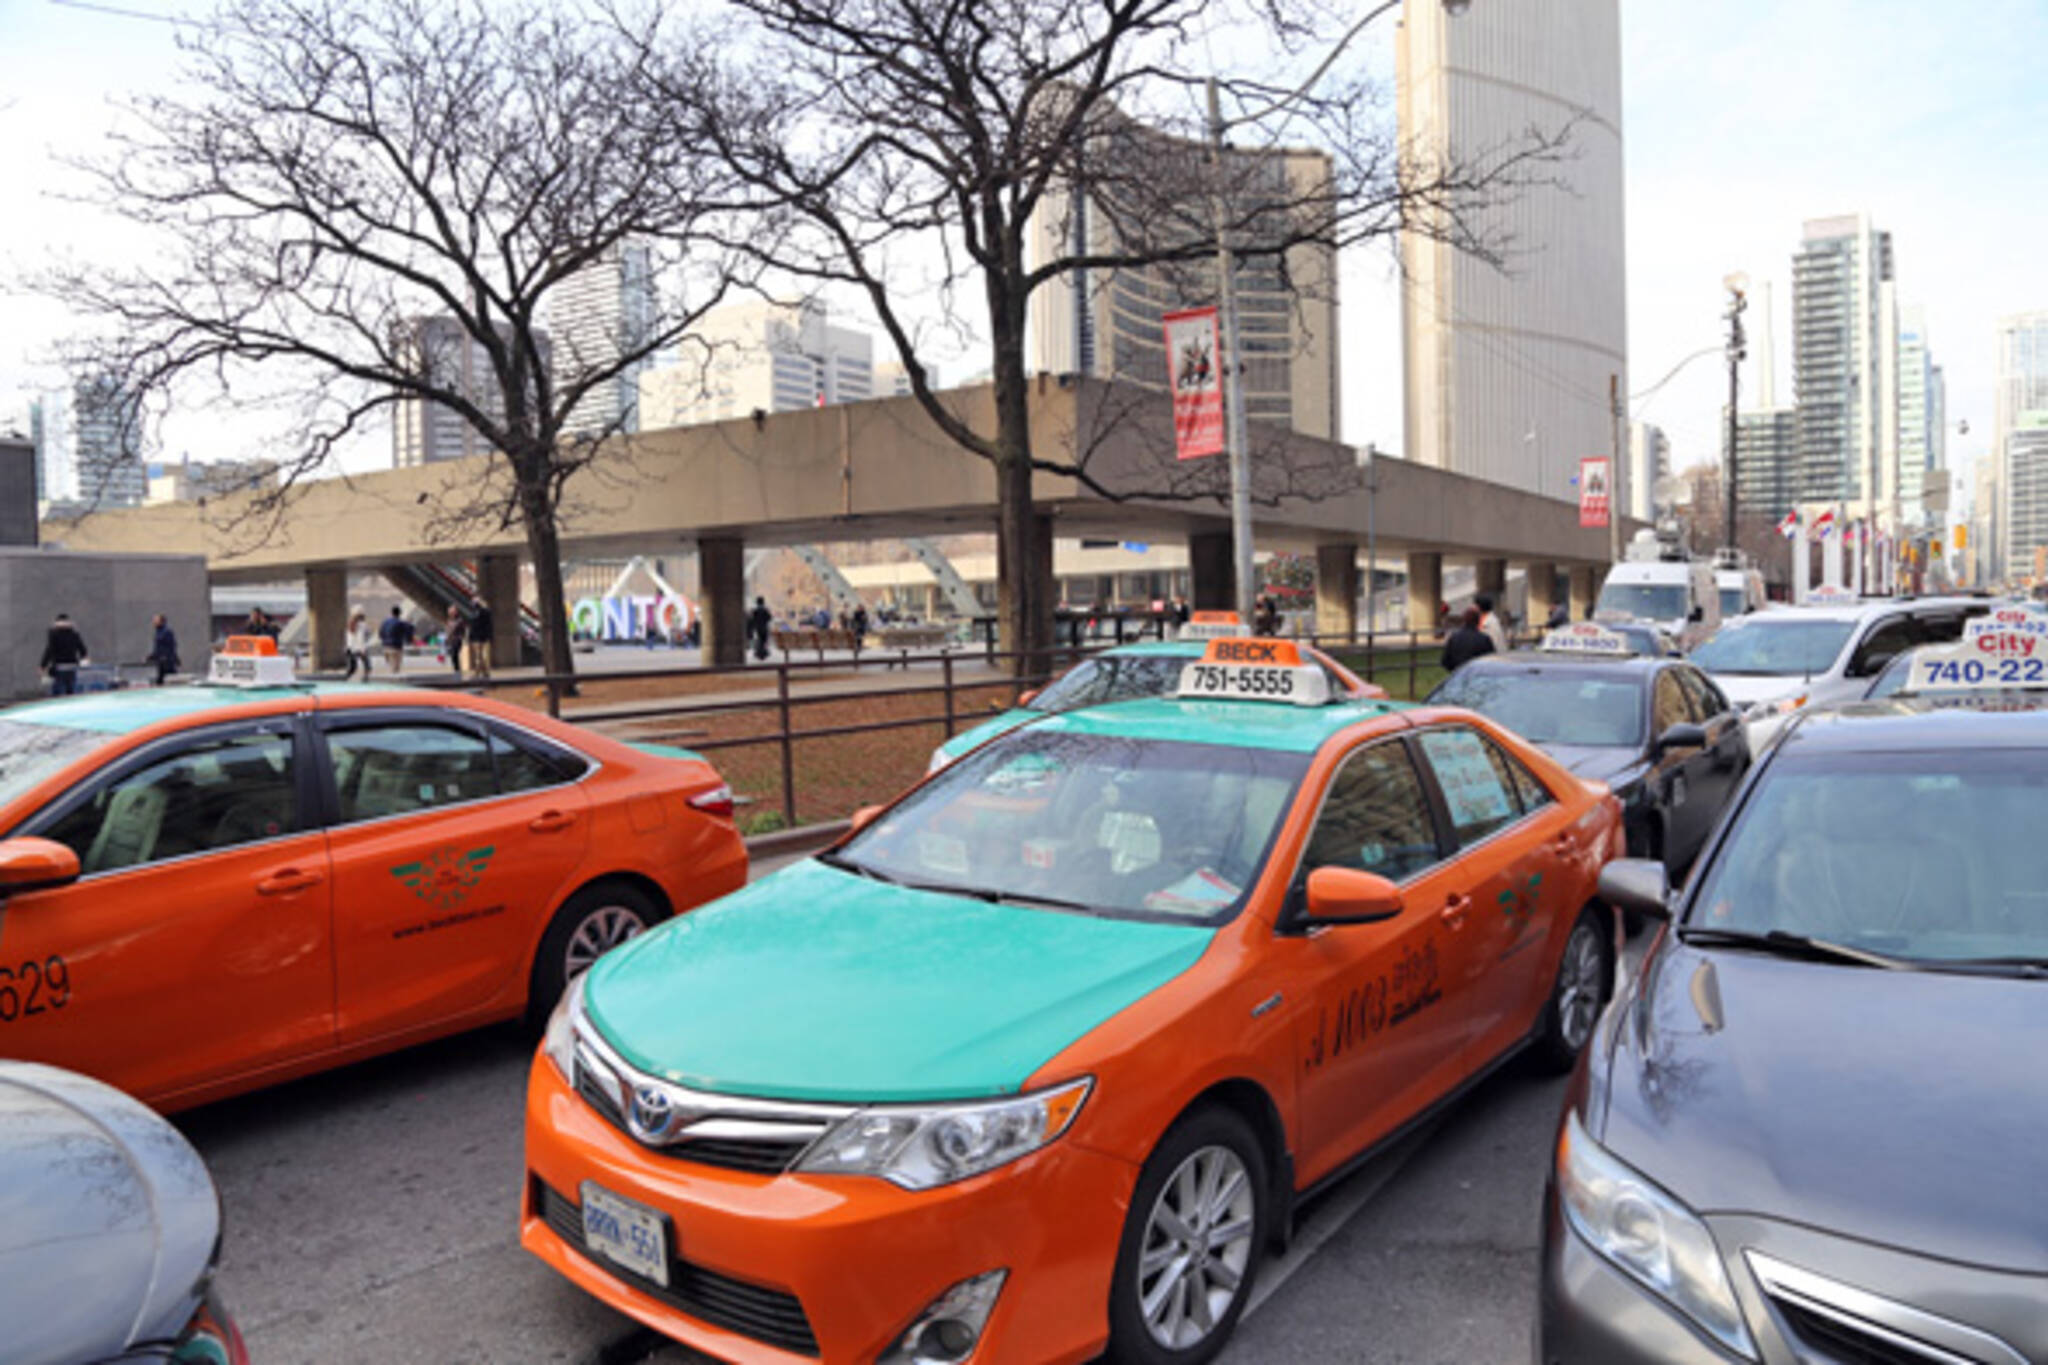 Beck taxi protest Toronto